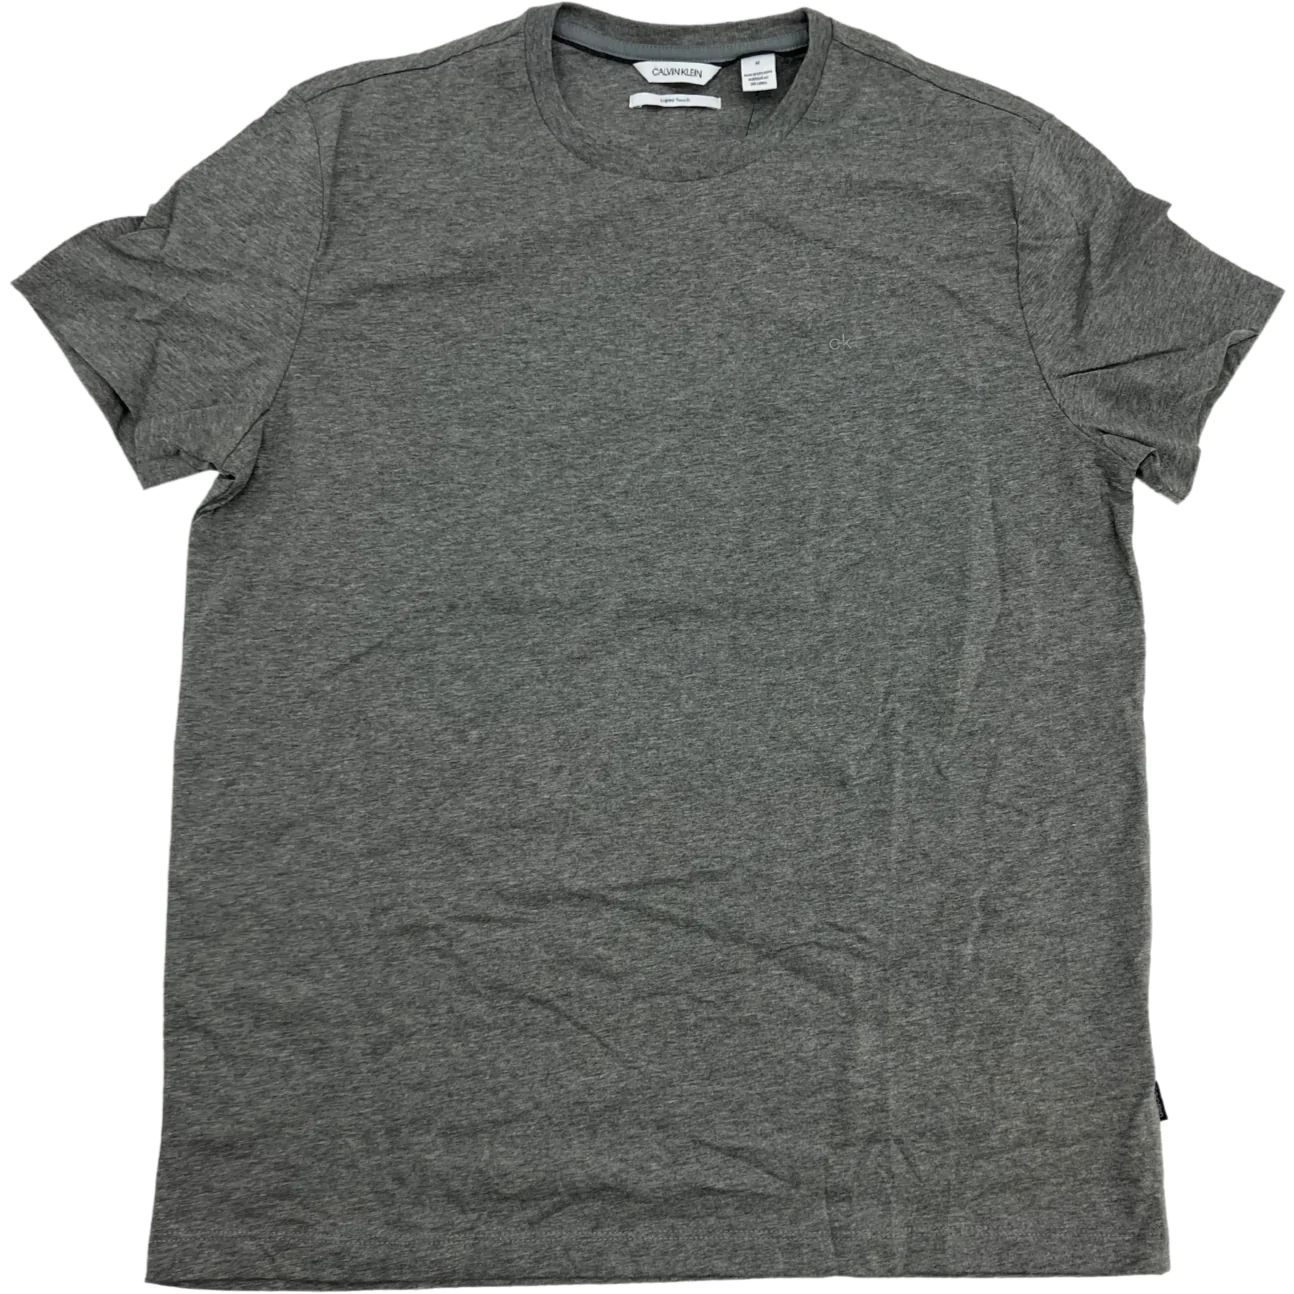 Calvin Klein Men's Liquid Touch T-Shirt: Grey / Size Medium